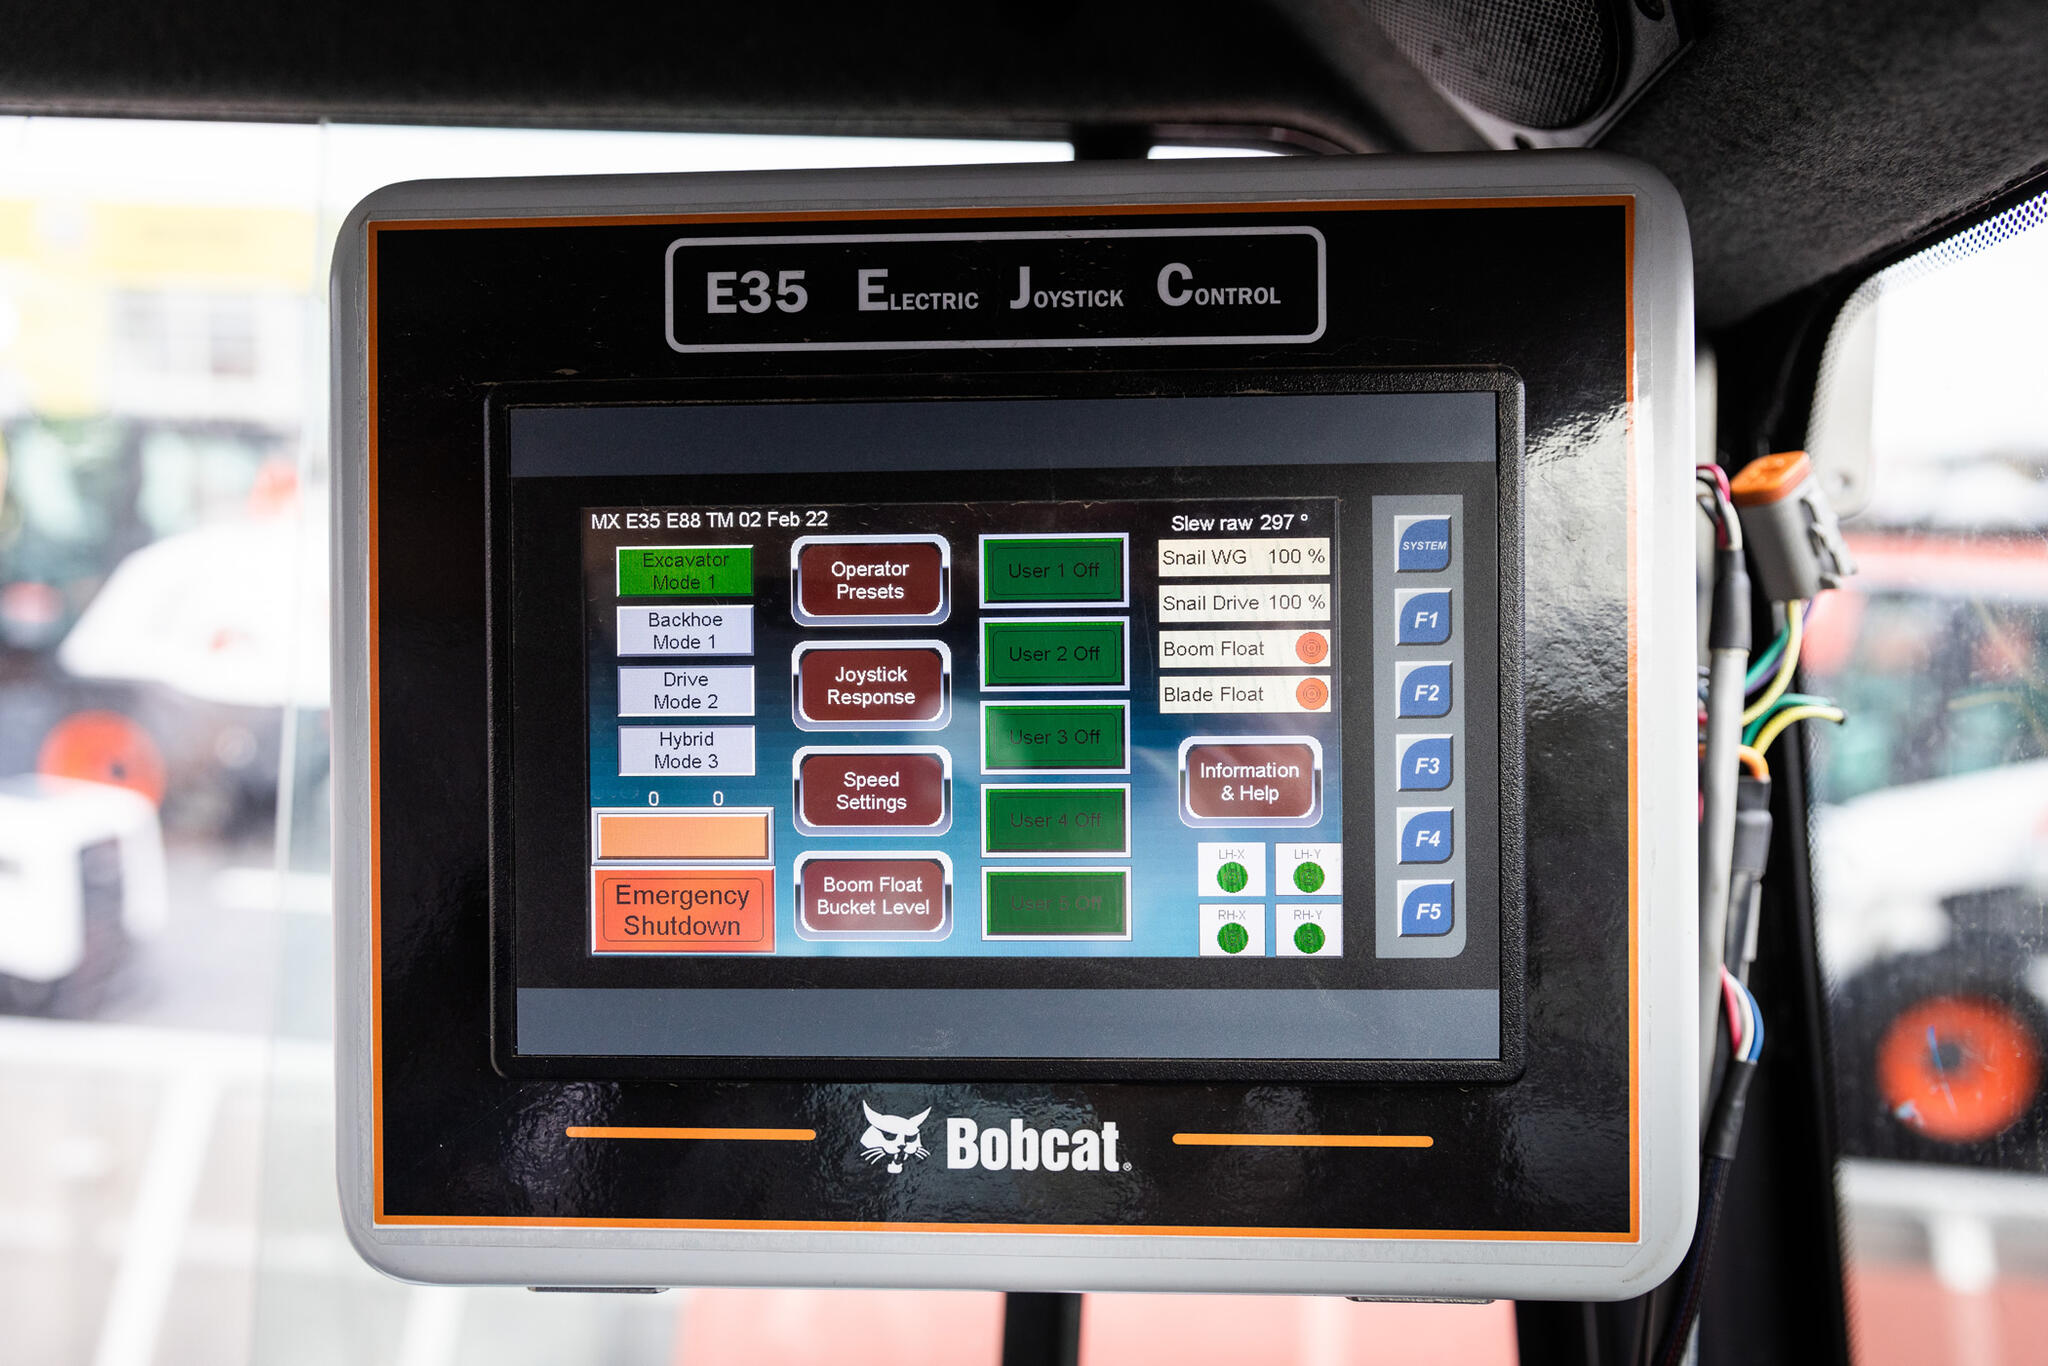 07. Bobcat E35z Electric Joystick Control